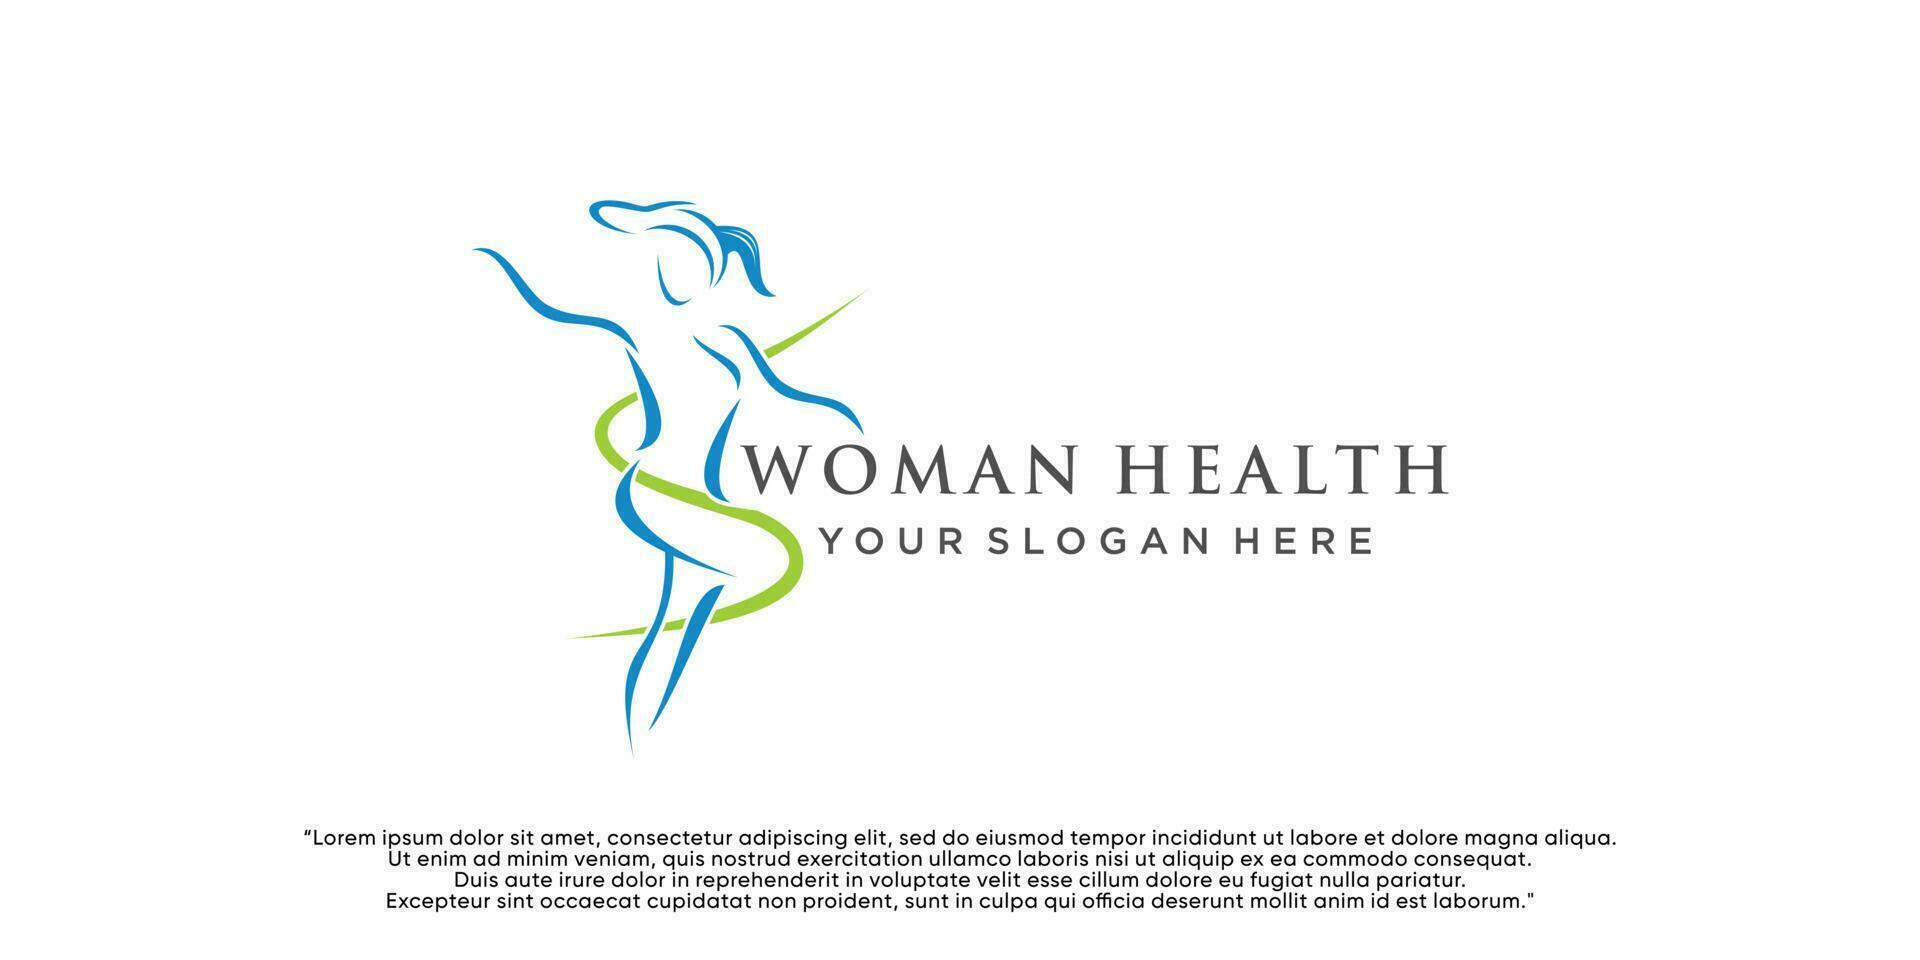 Women health logo design simple concept Premium Vector